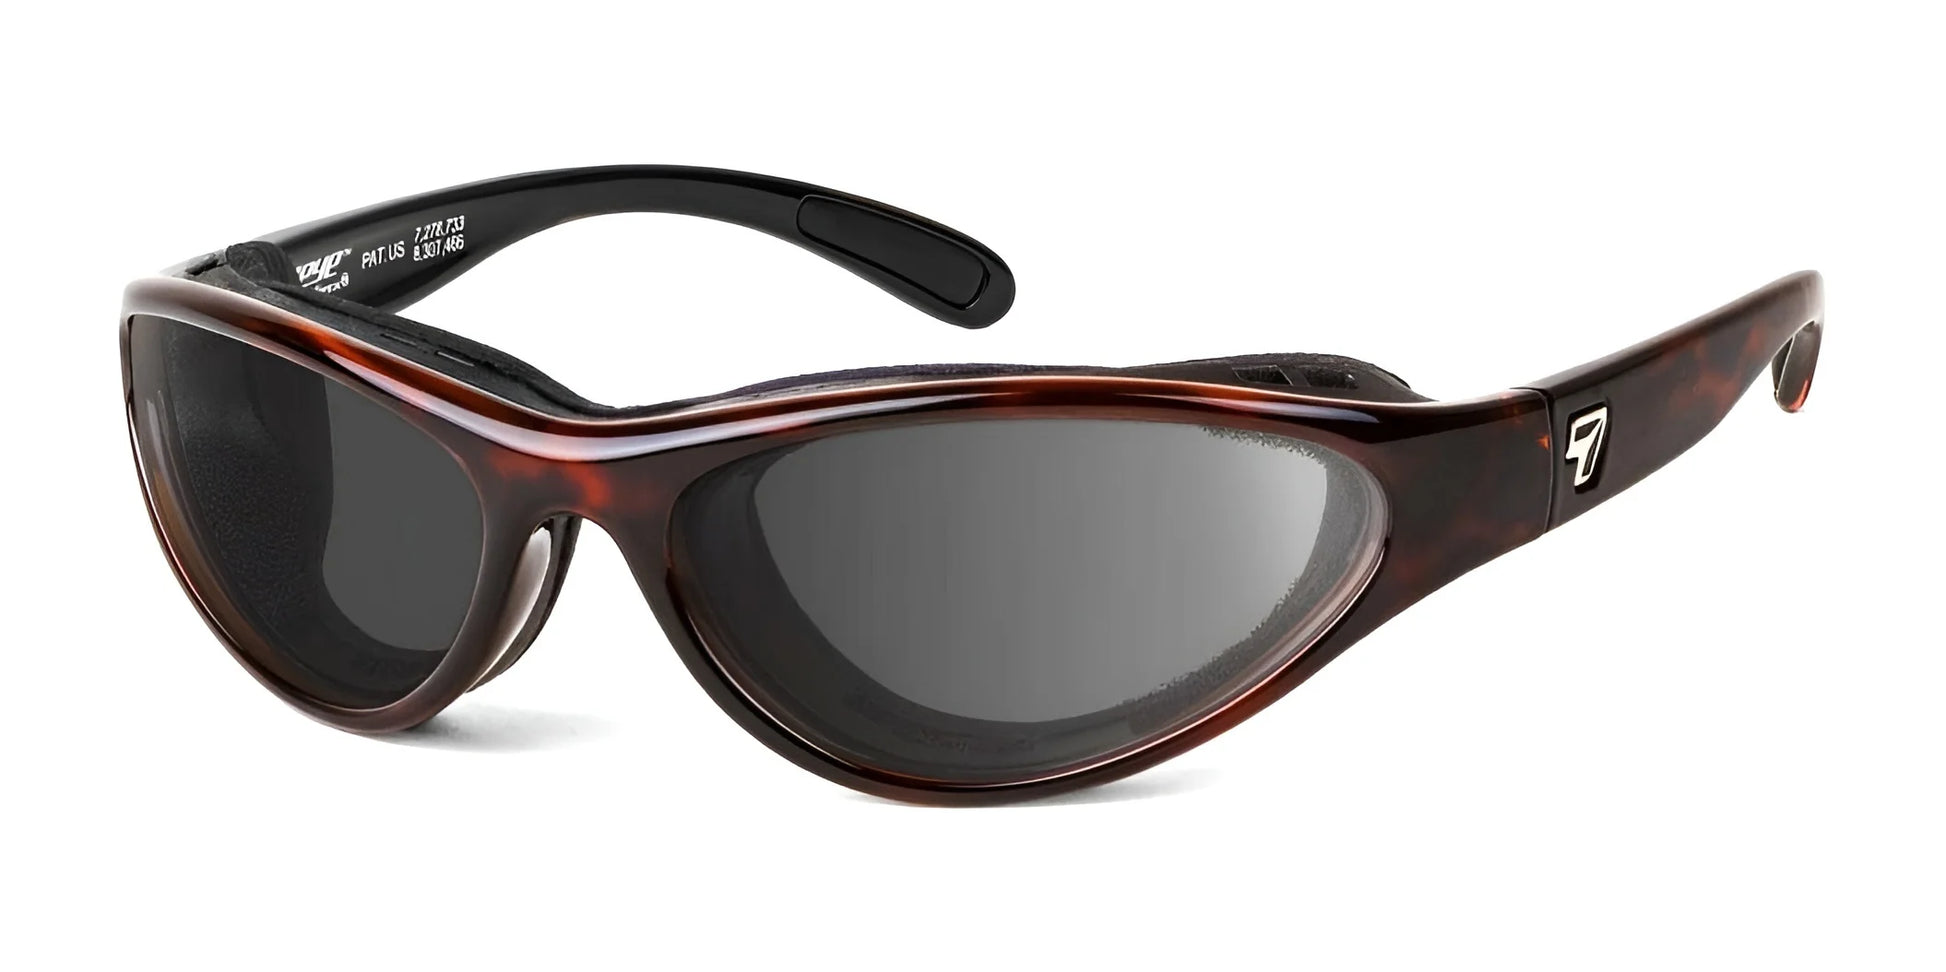 7eye Viento Sunglasses Dark Tortoise / DARKshift Photochromic - Clr to DARK Gray